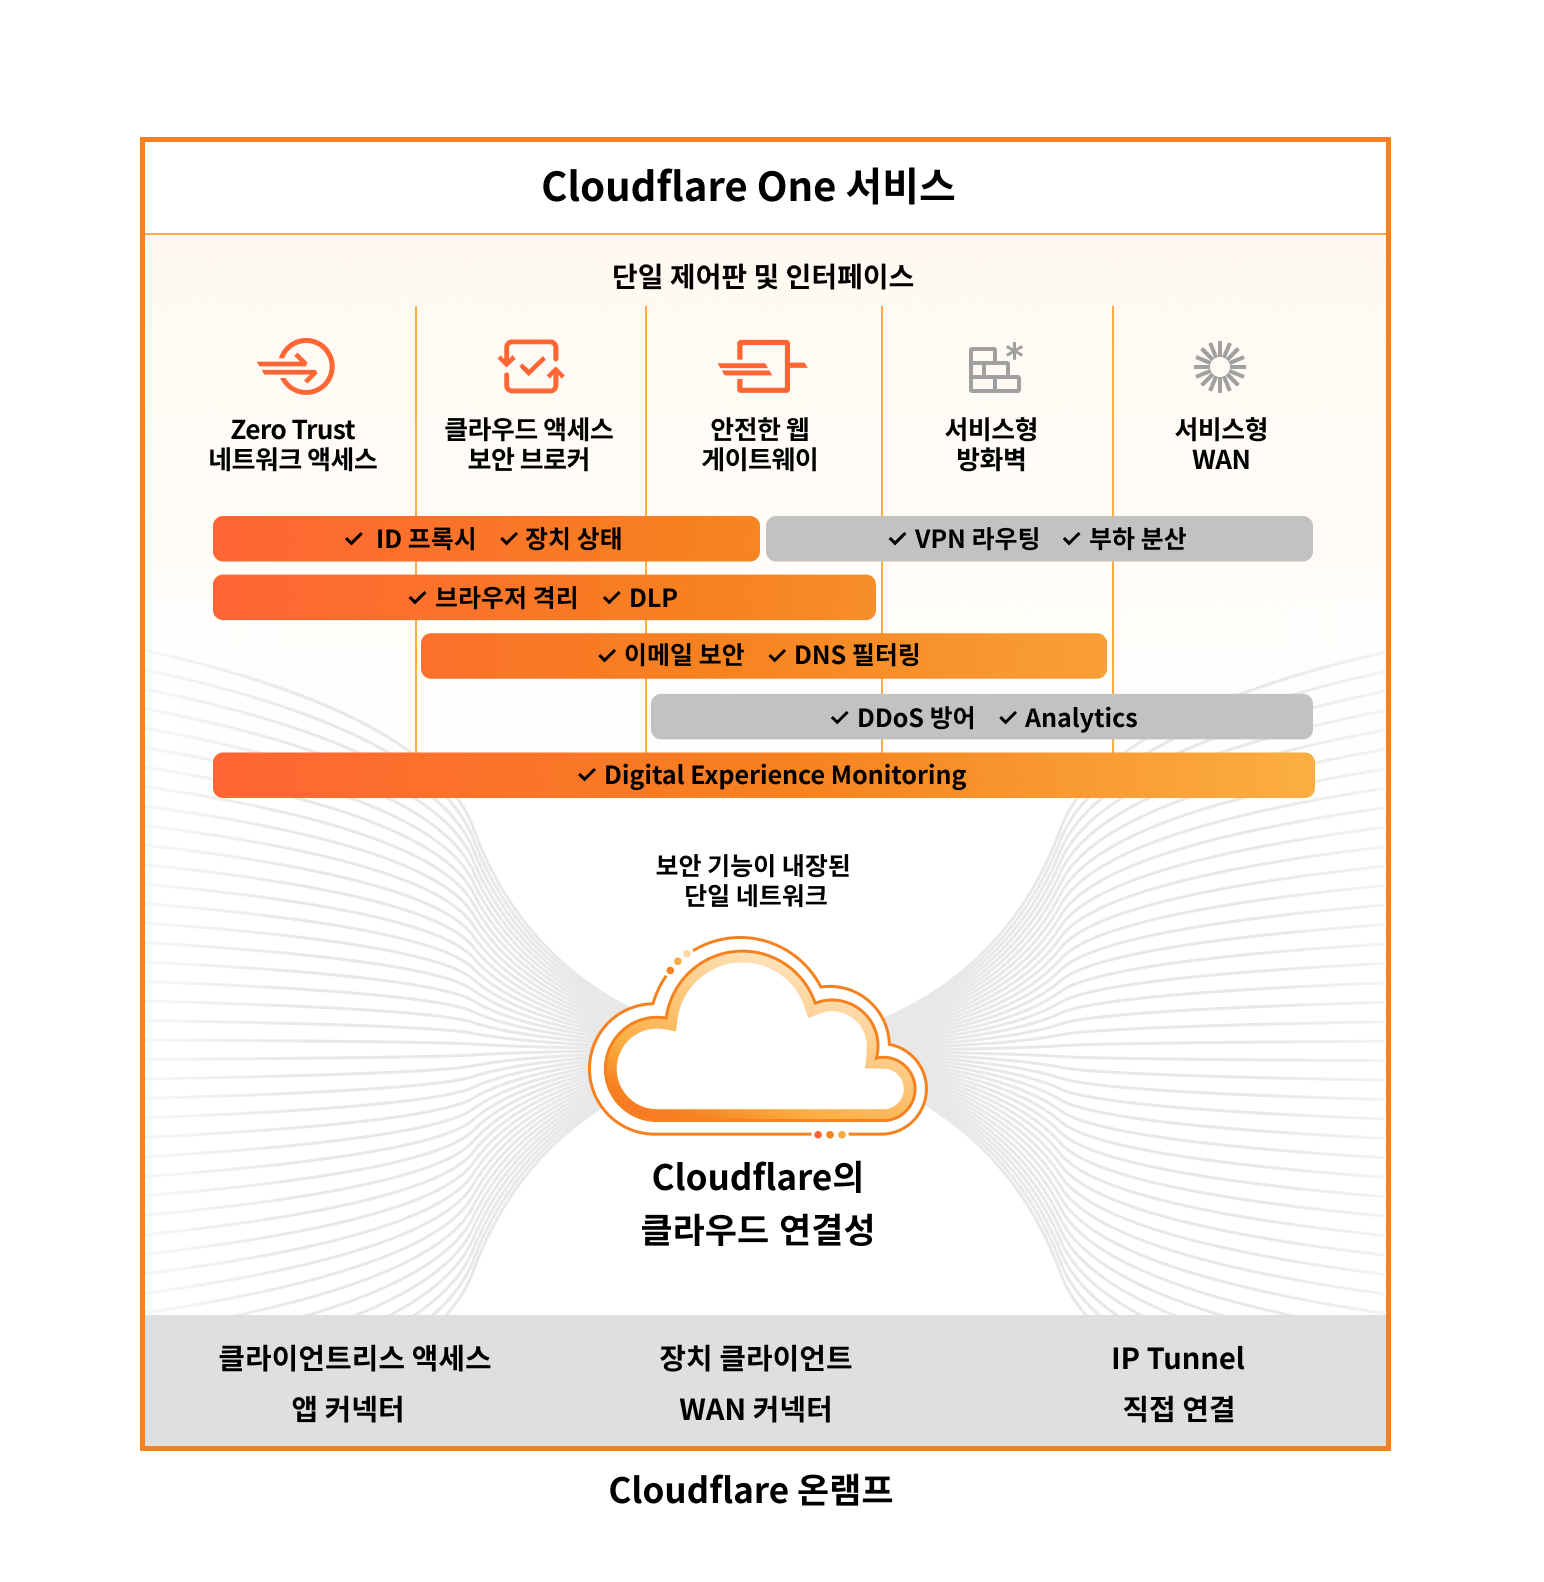 Cloudflare One Marketecture diagram